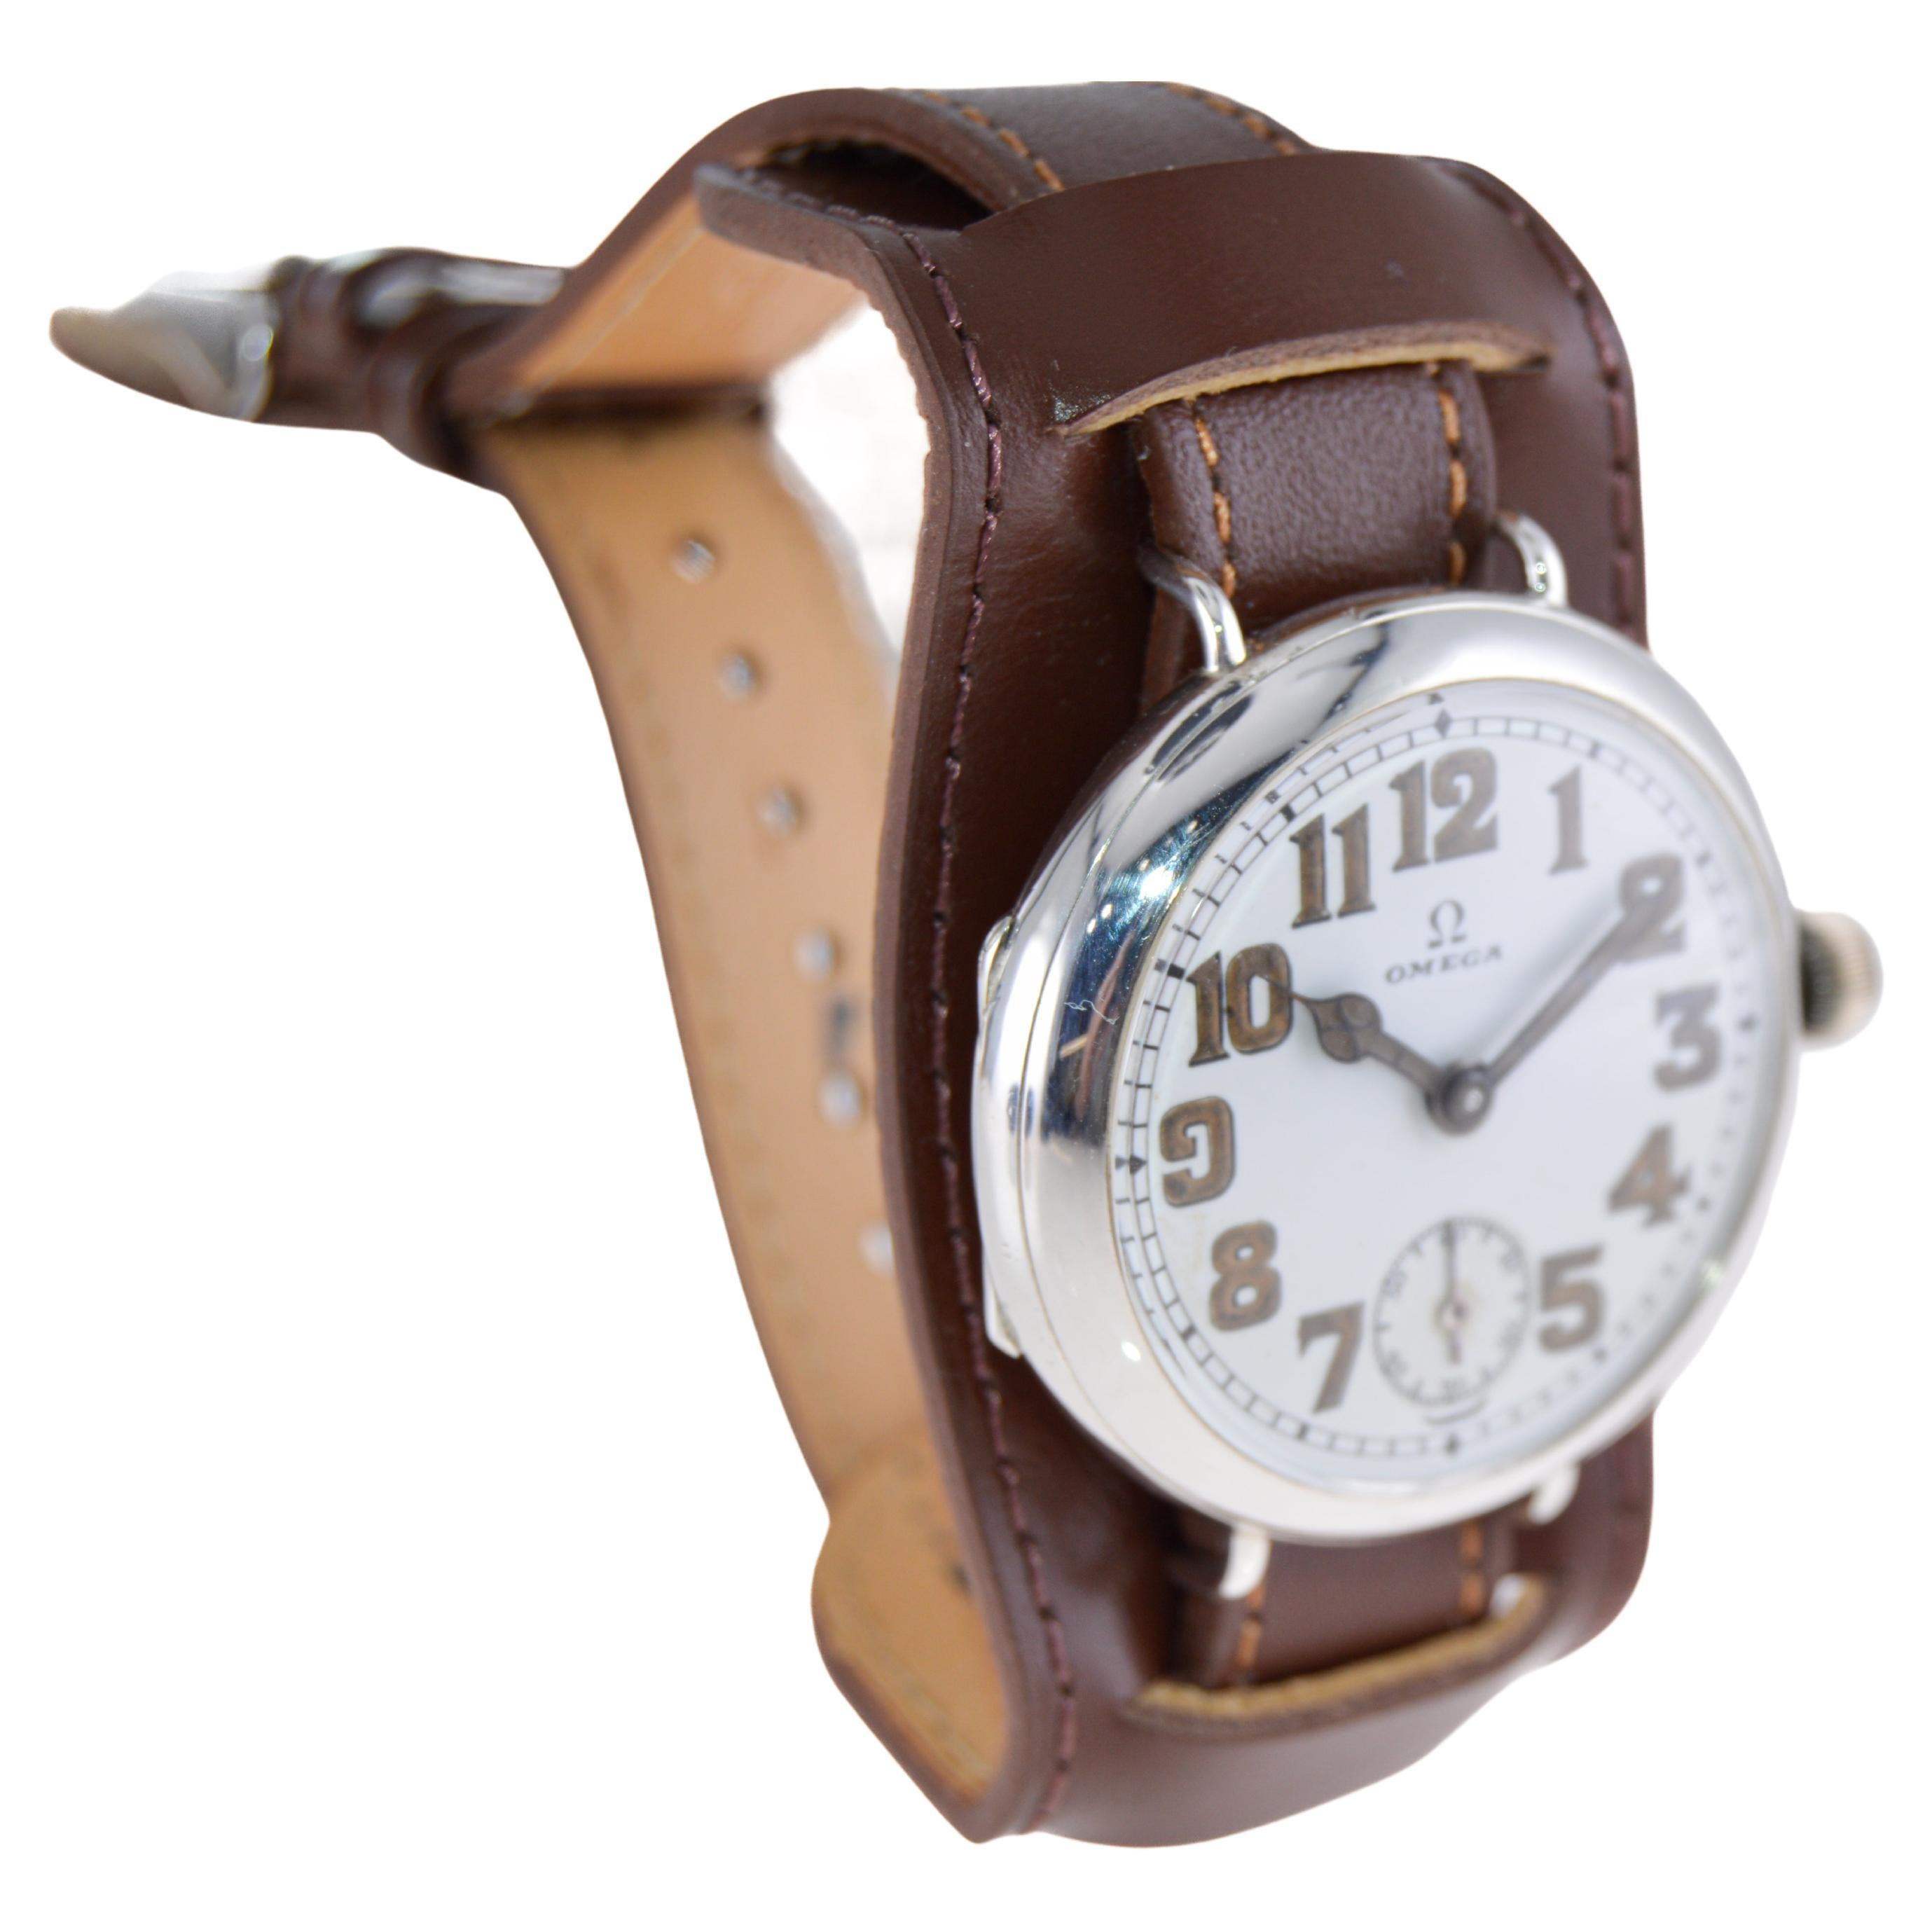 Omega Sterlingsilber-Uhr für Damen oder Herren im Angebot